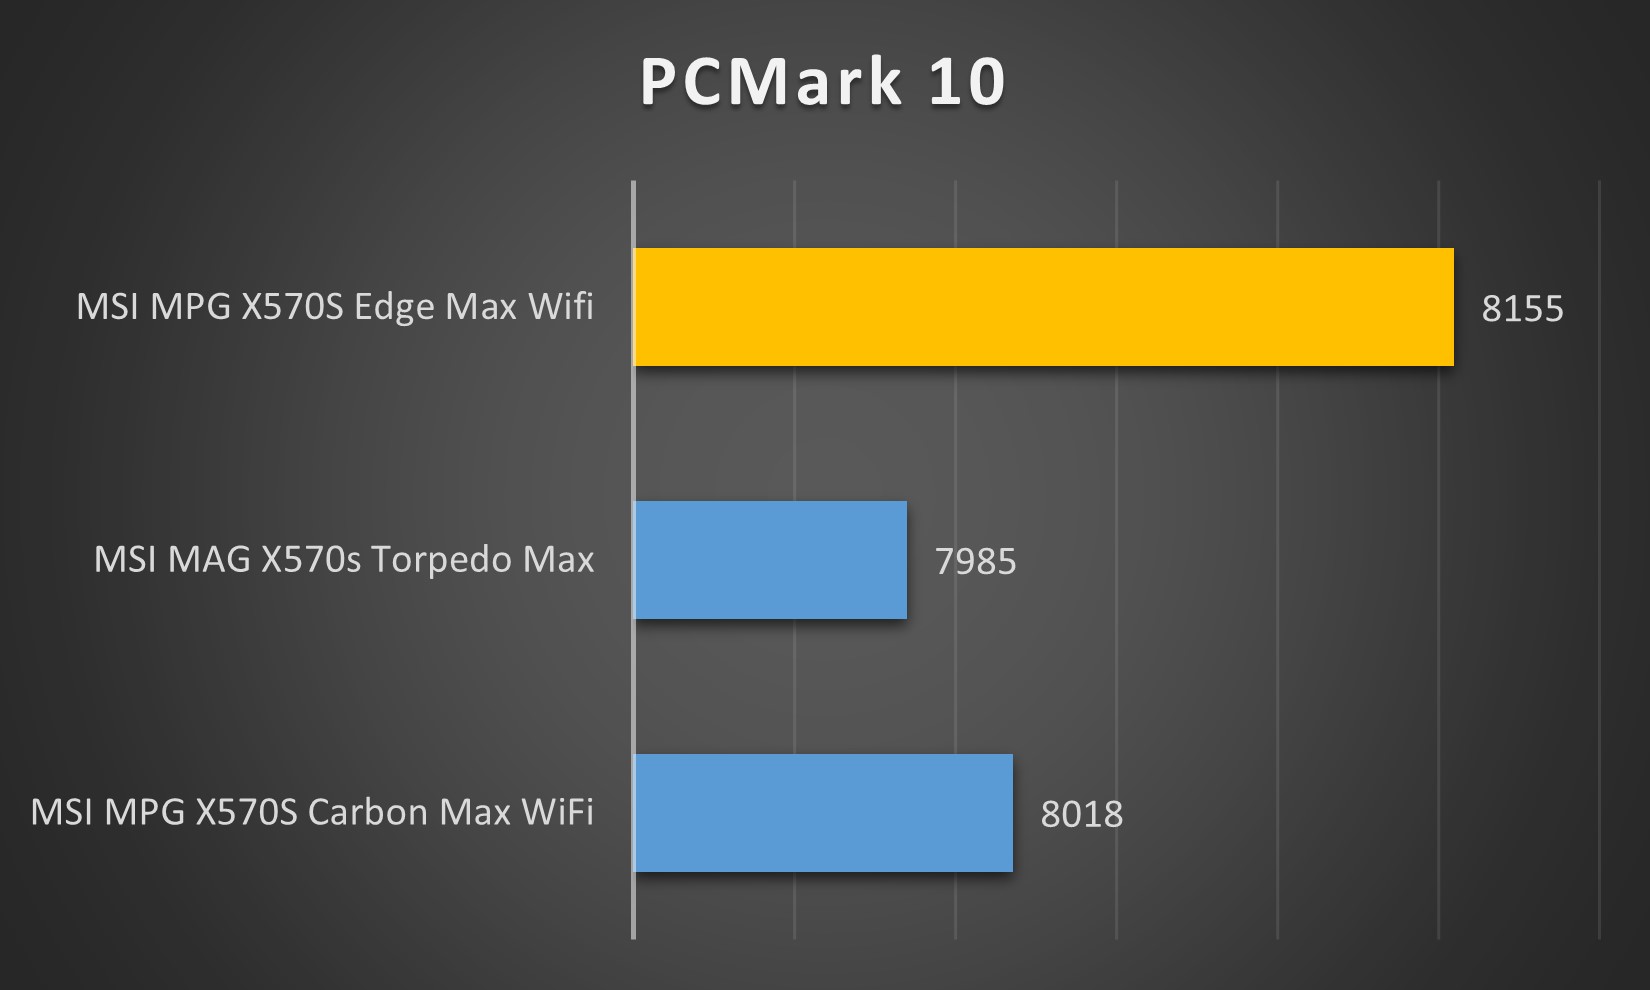 msi mpg x570x edge max wifi pcmark